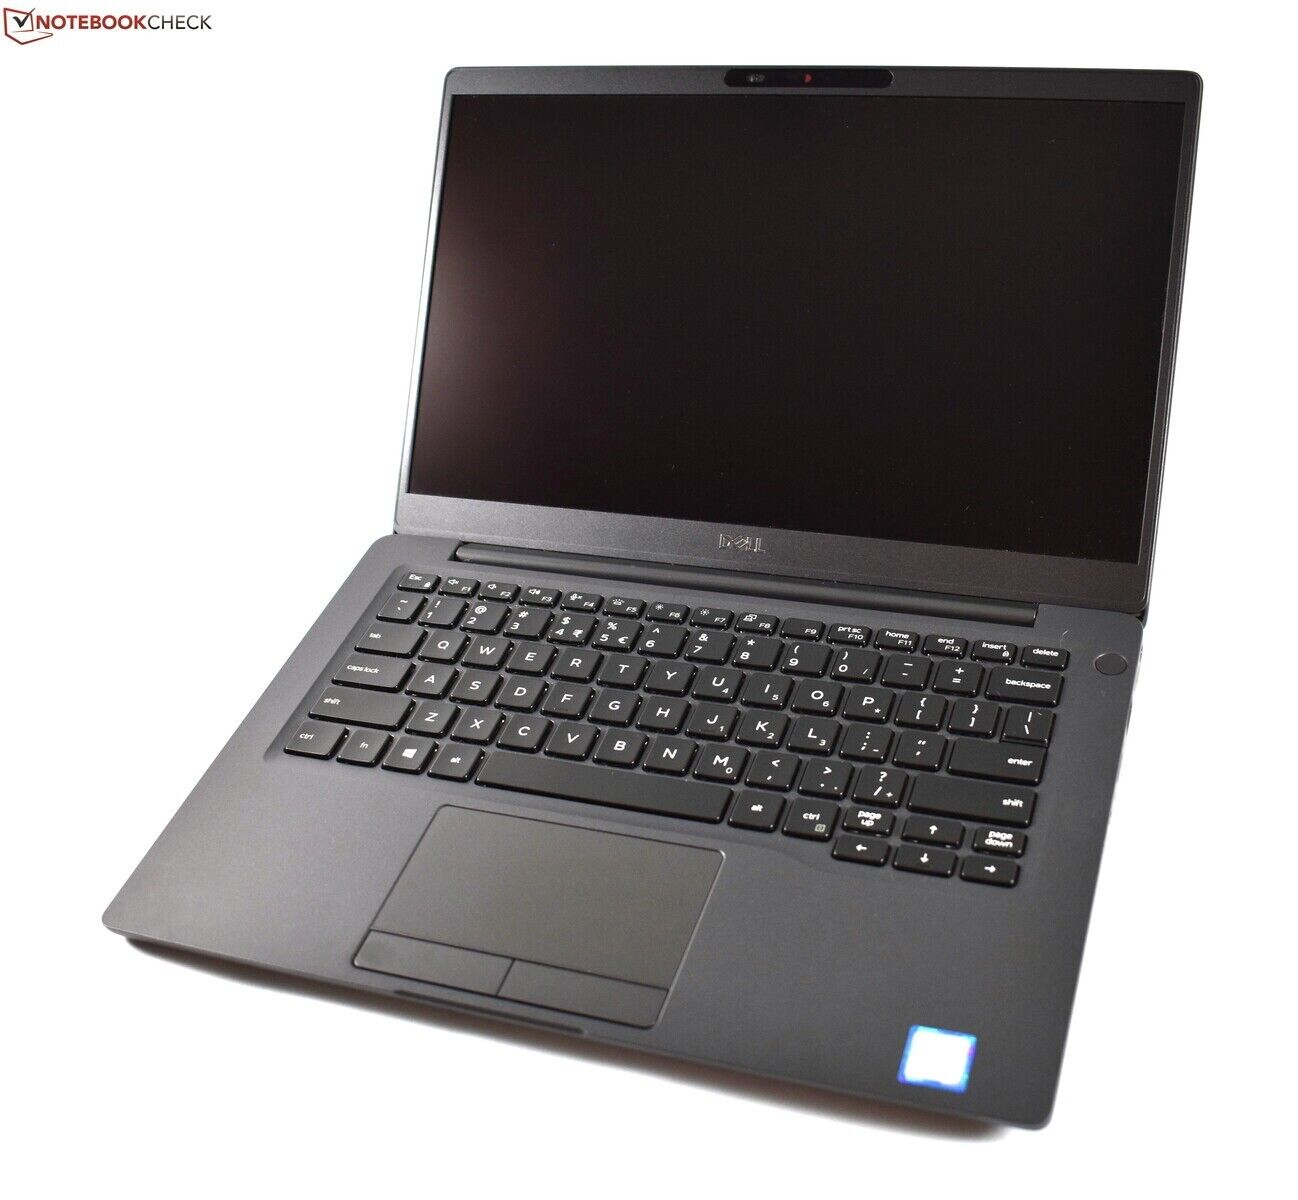 Dell 7300 Core i5-8365U 16GB Ram 512GB NVME SSD Laptop #950SE